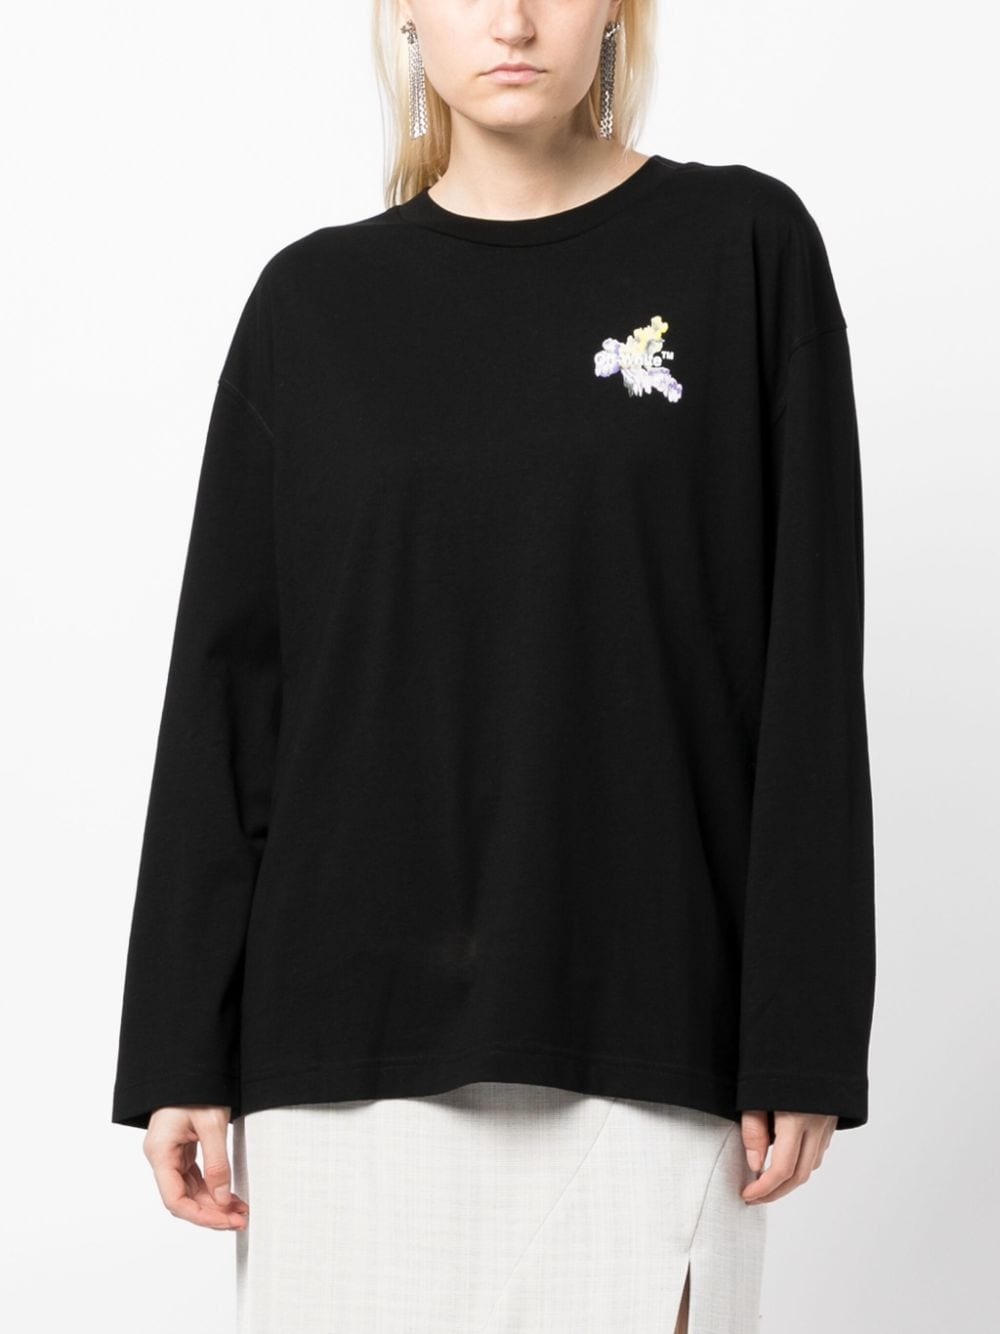 Flower Arrow cotton sweatshirt - 3